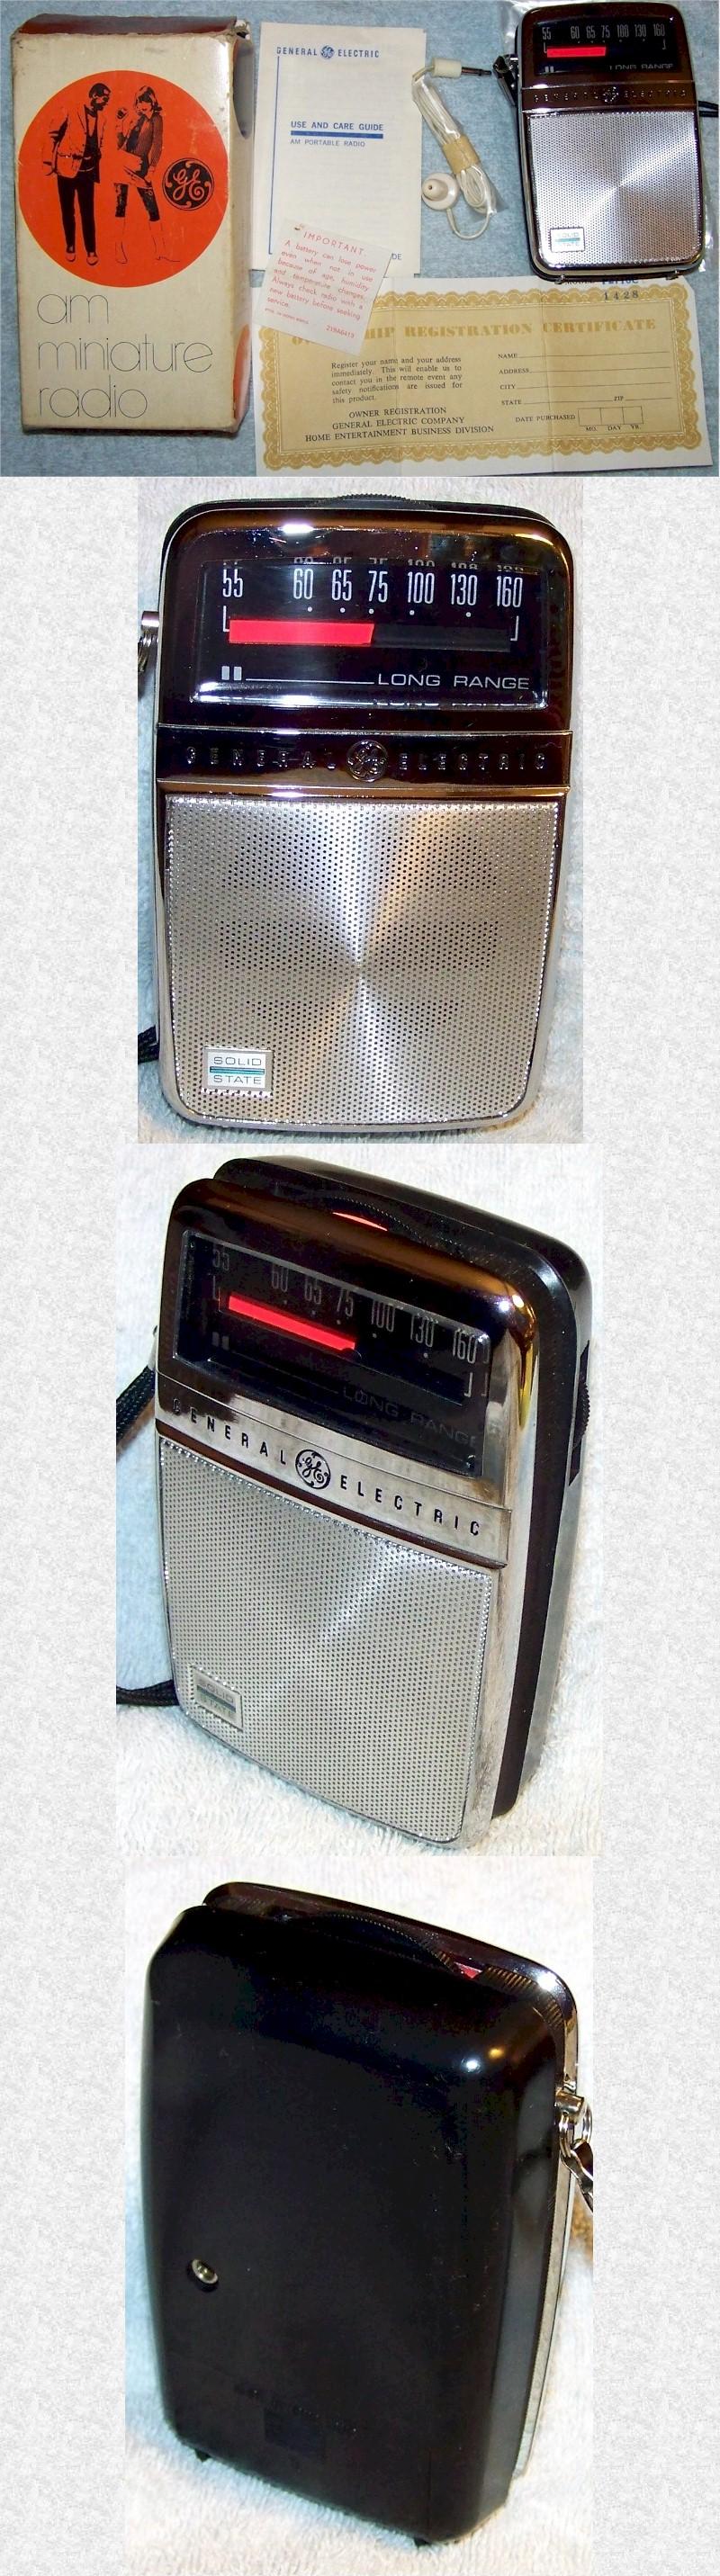 General Electric P-2710 Pocket Transistor (1961)